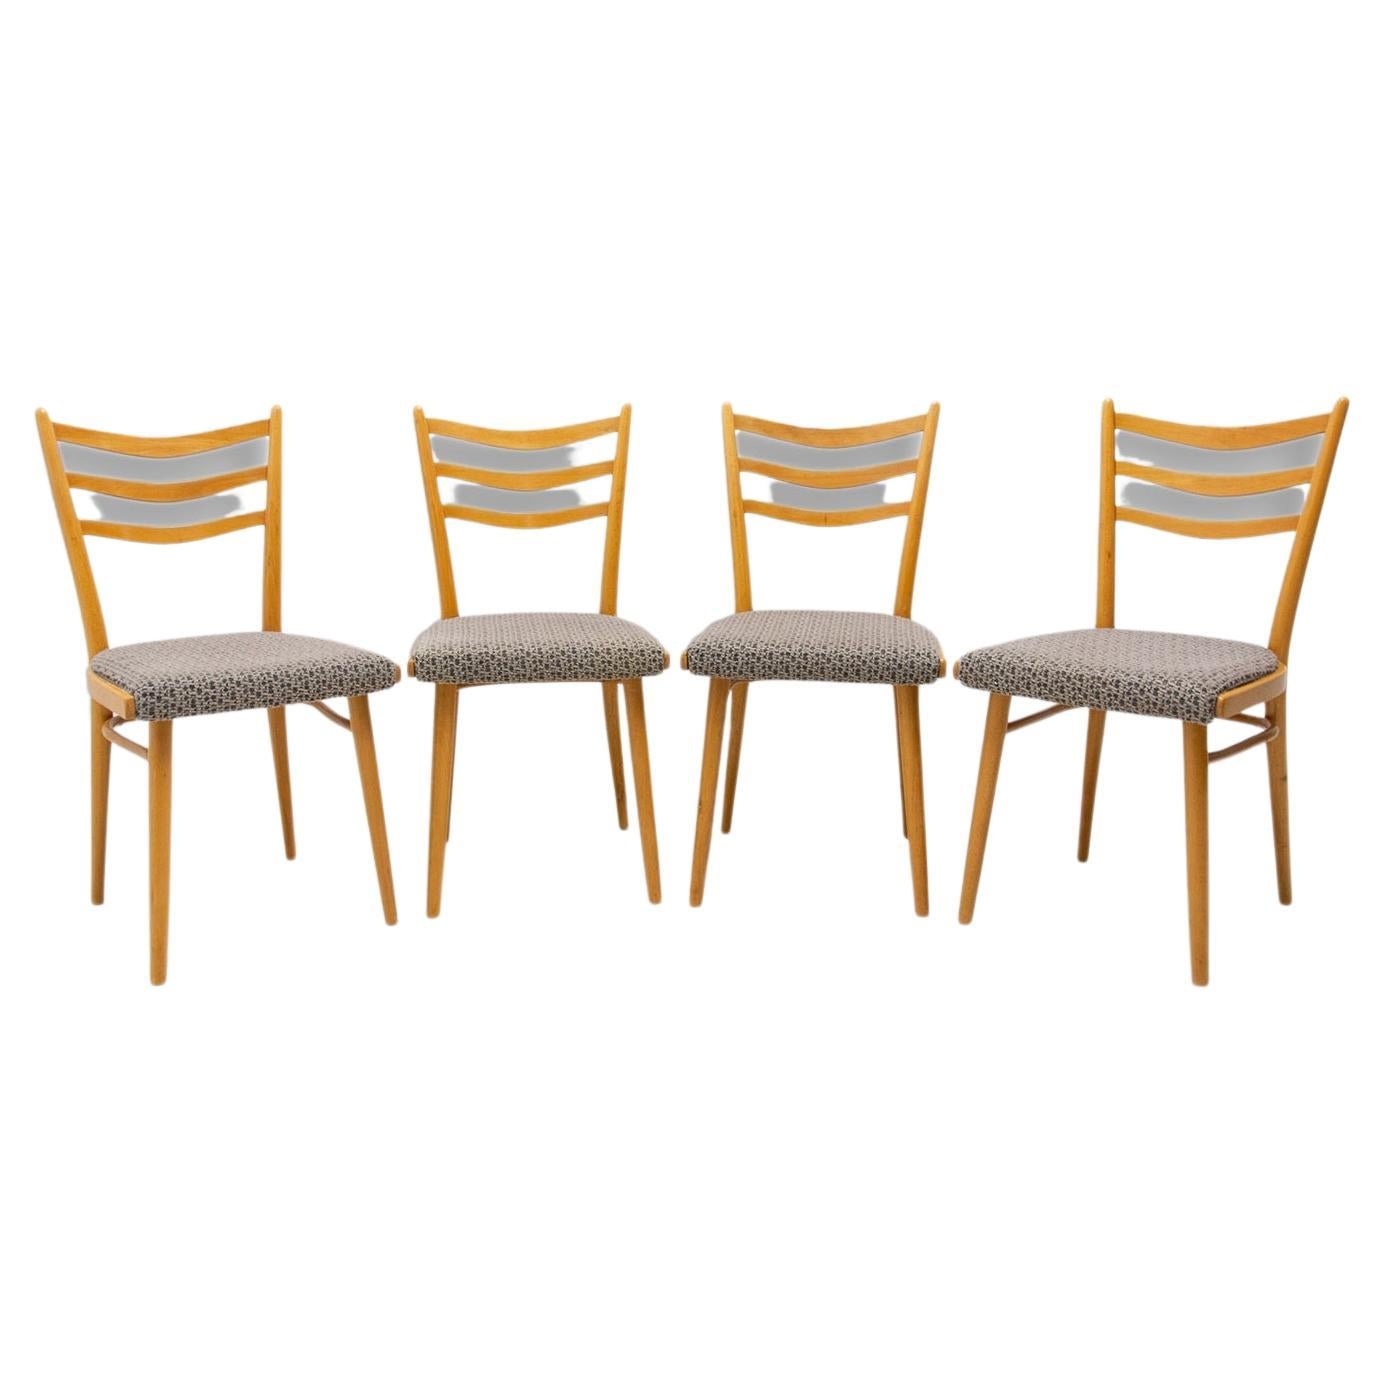 Mid-Century Dining Chairs by Jitona, 1960s, Set of 4